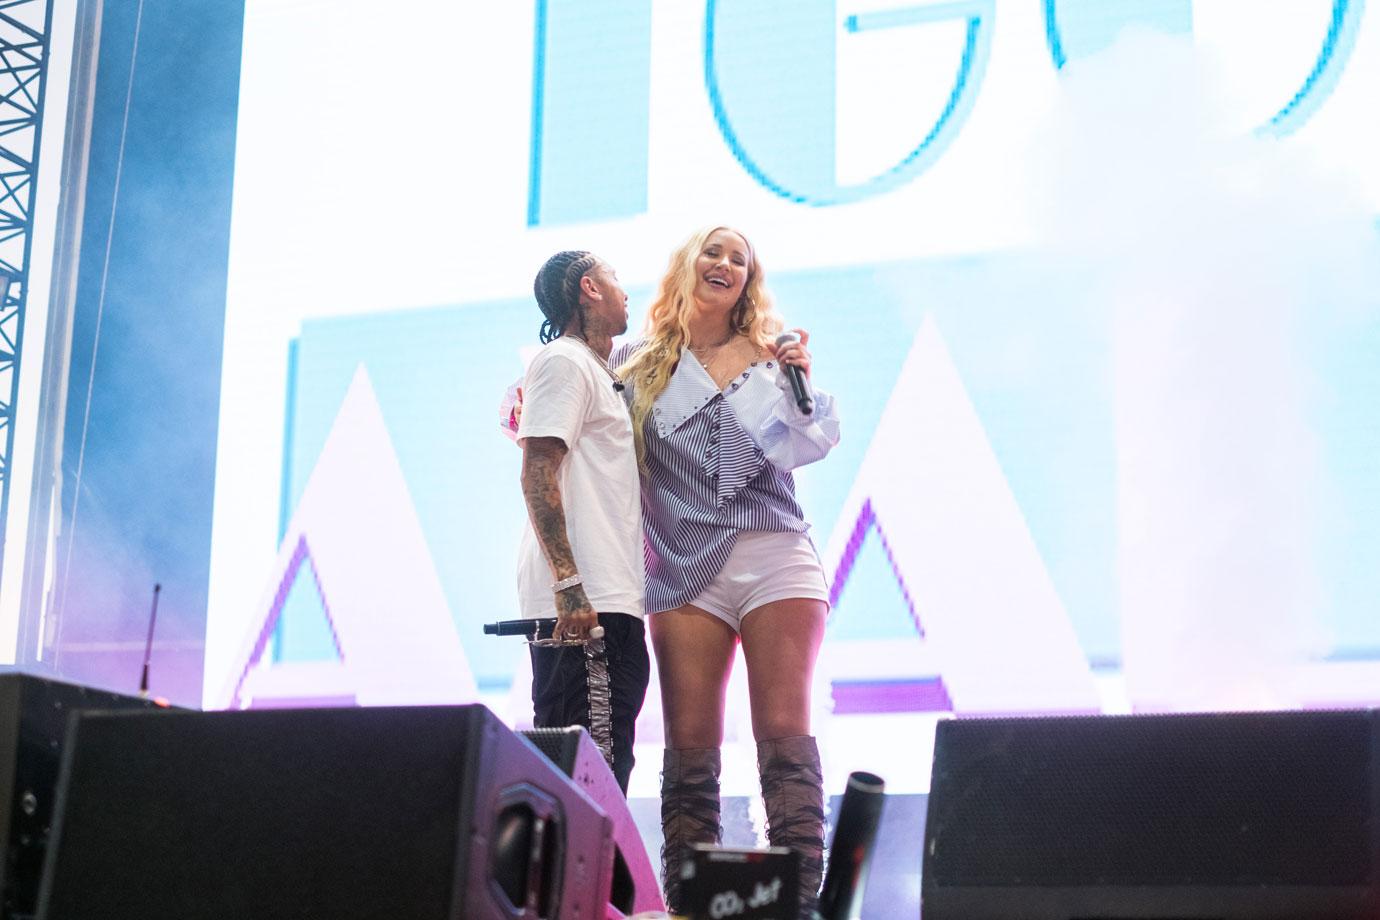 Tyga sparks dating rumors by sharing snap of Iggy Azalea's shoes